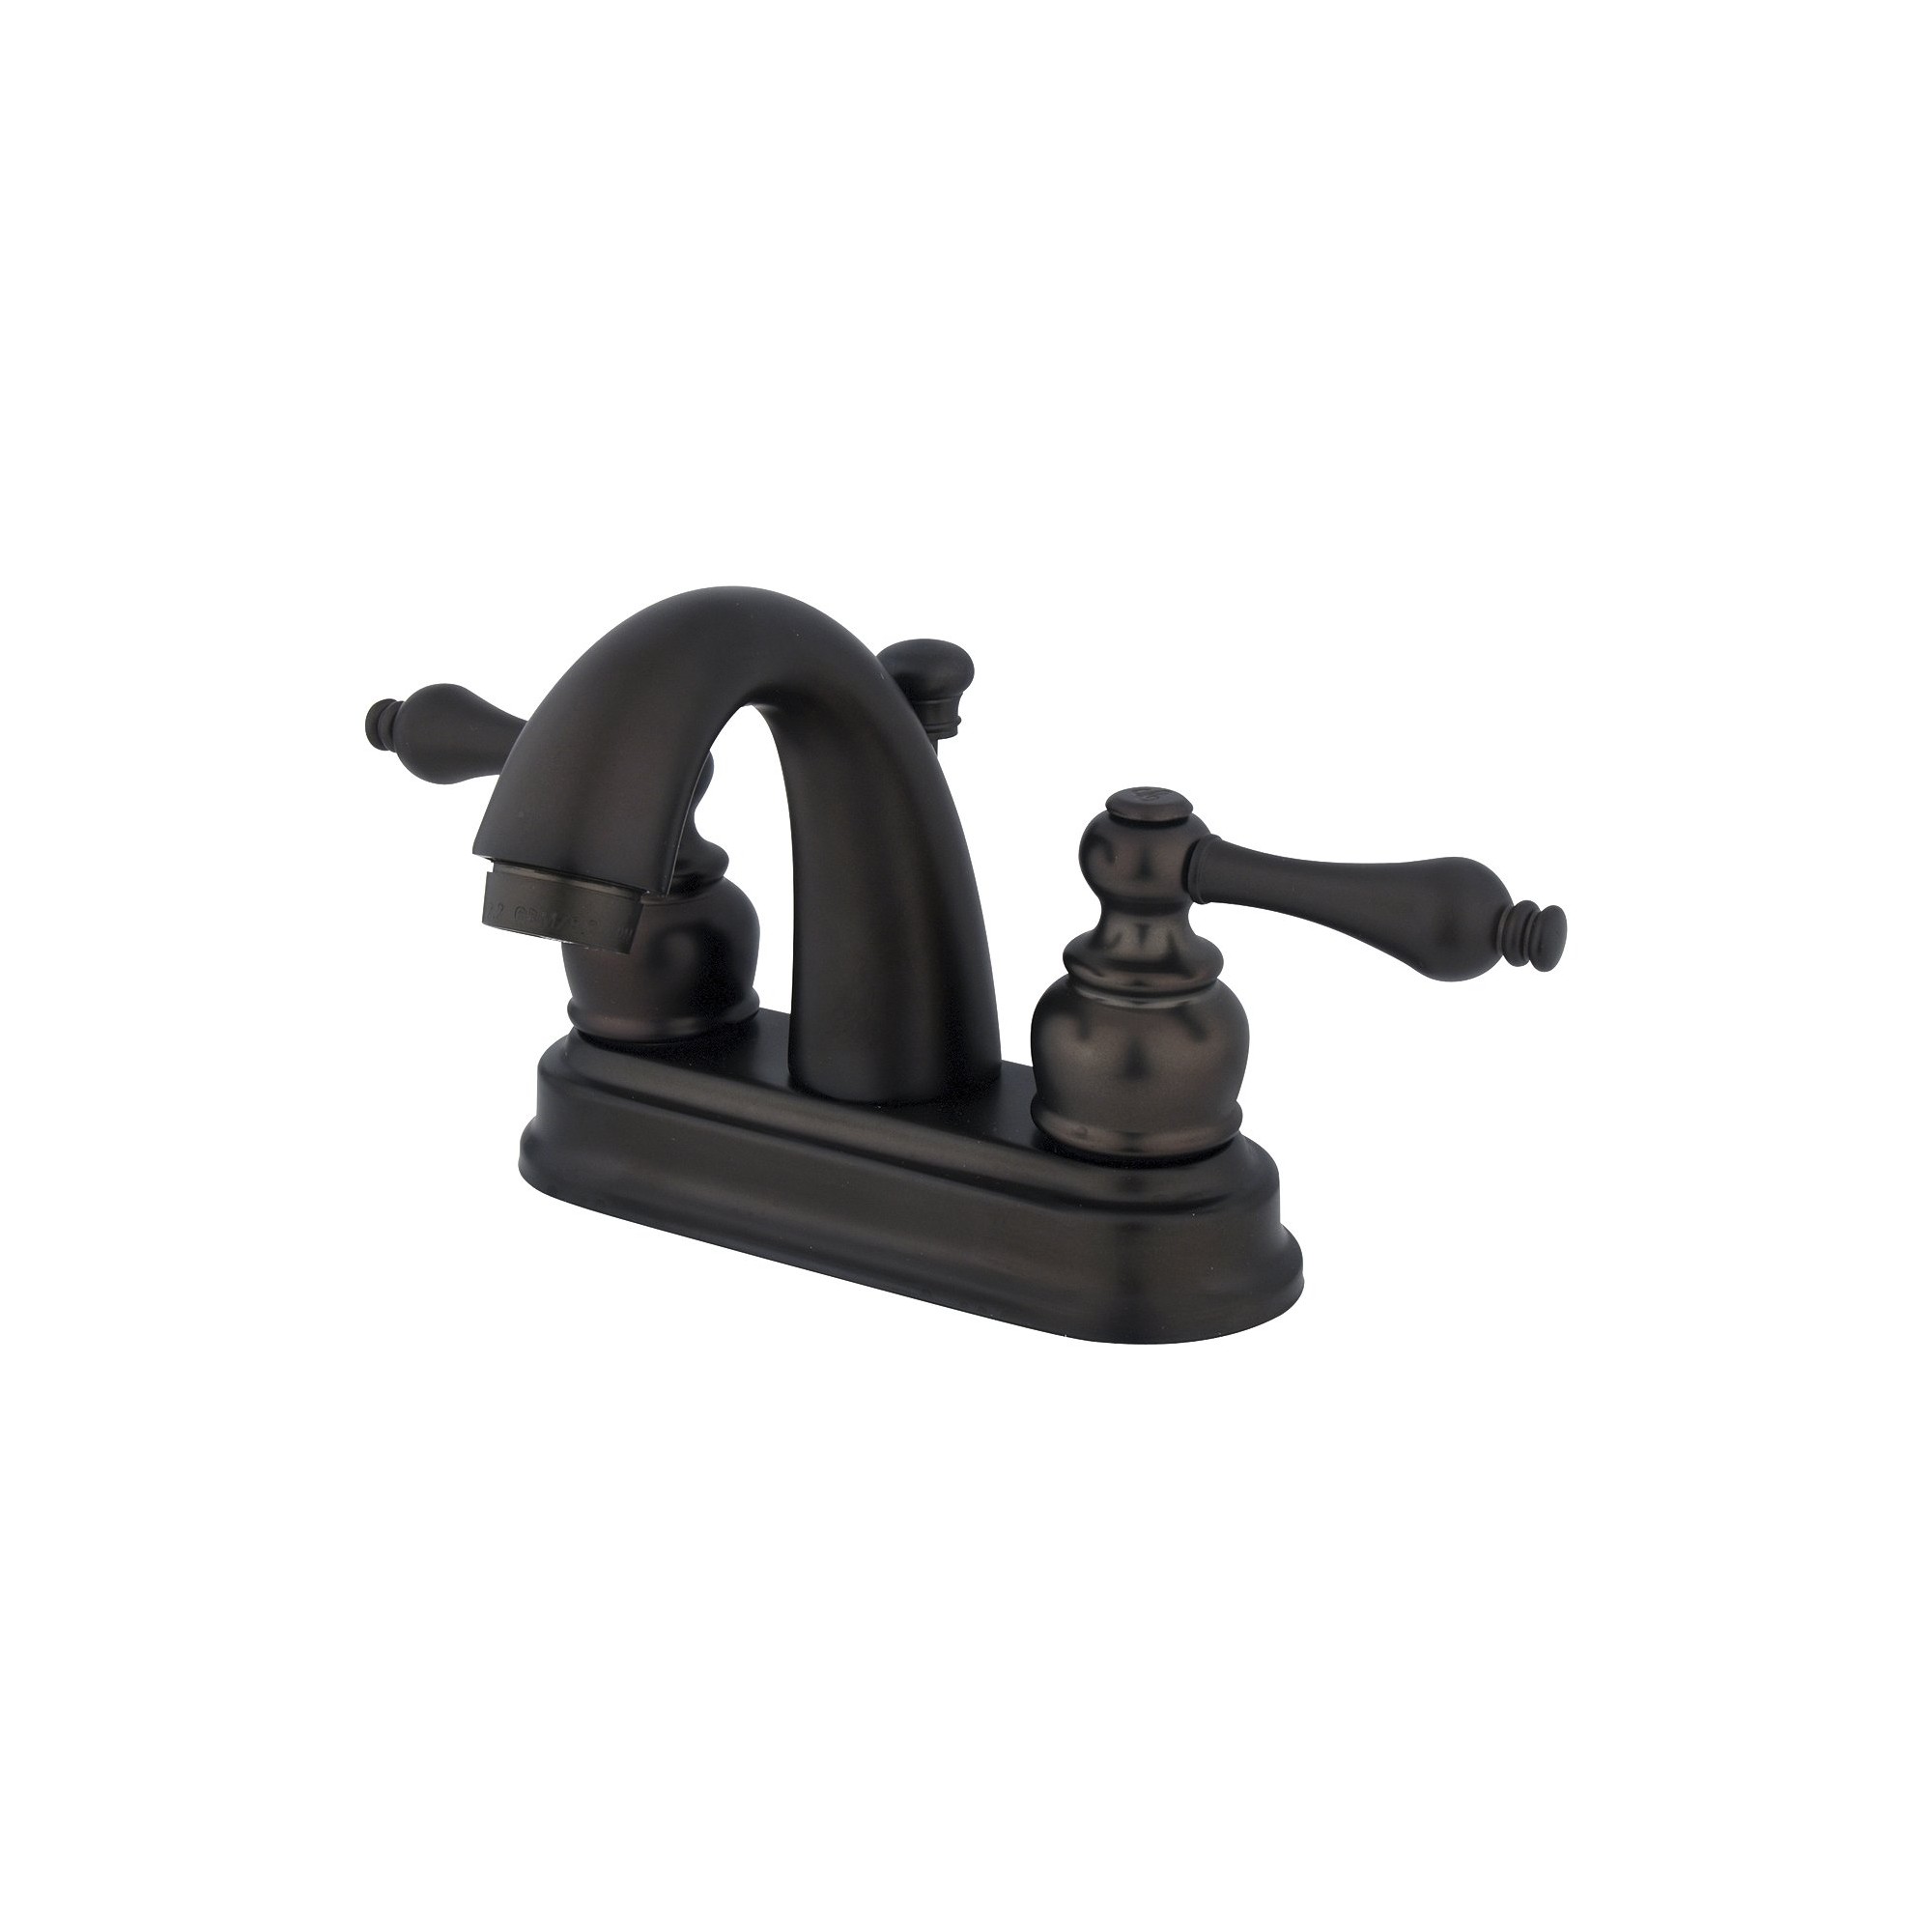 Restoration Classic Bathroom Faucet Oil Rubbed Bronze - Kingston Brass